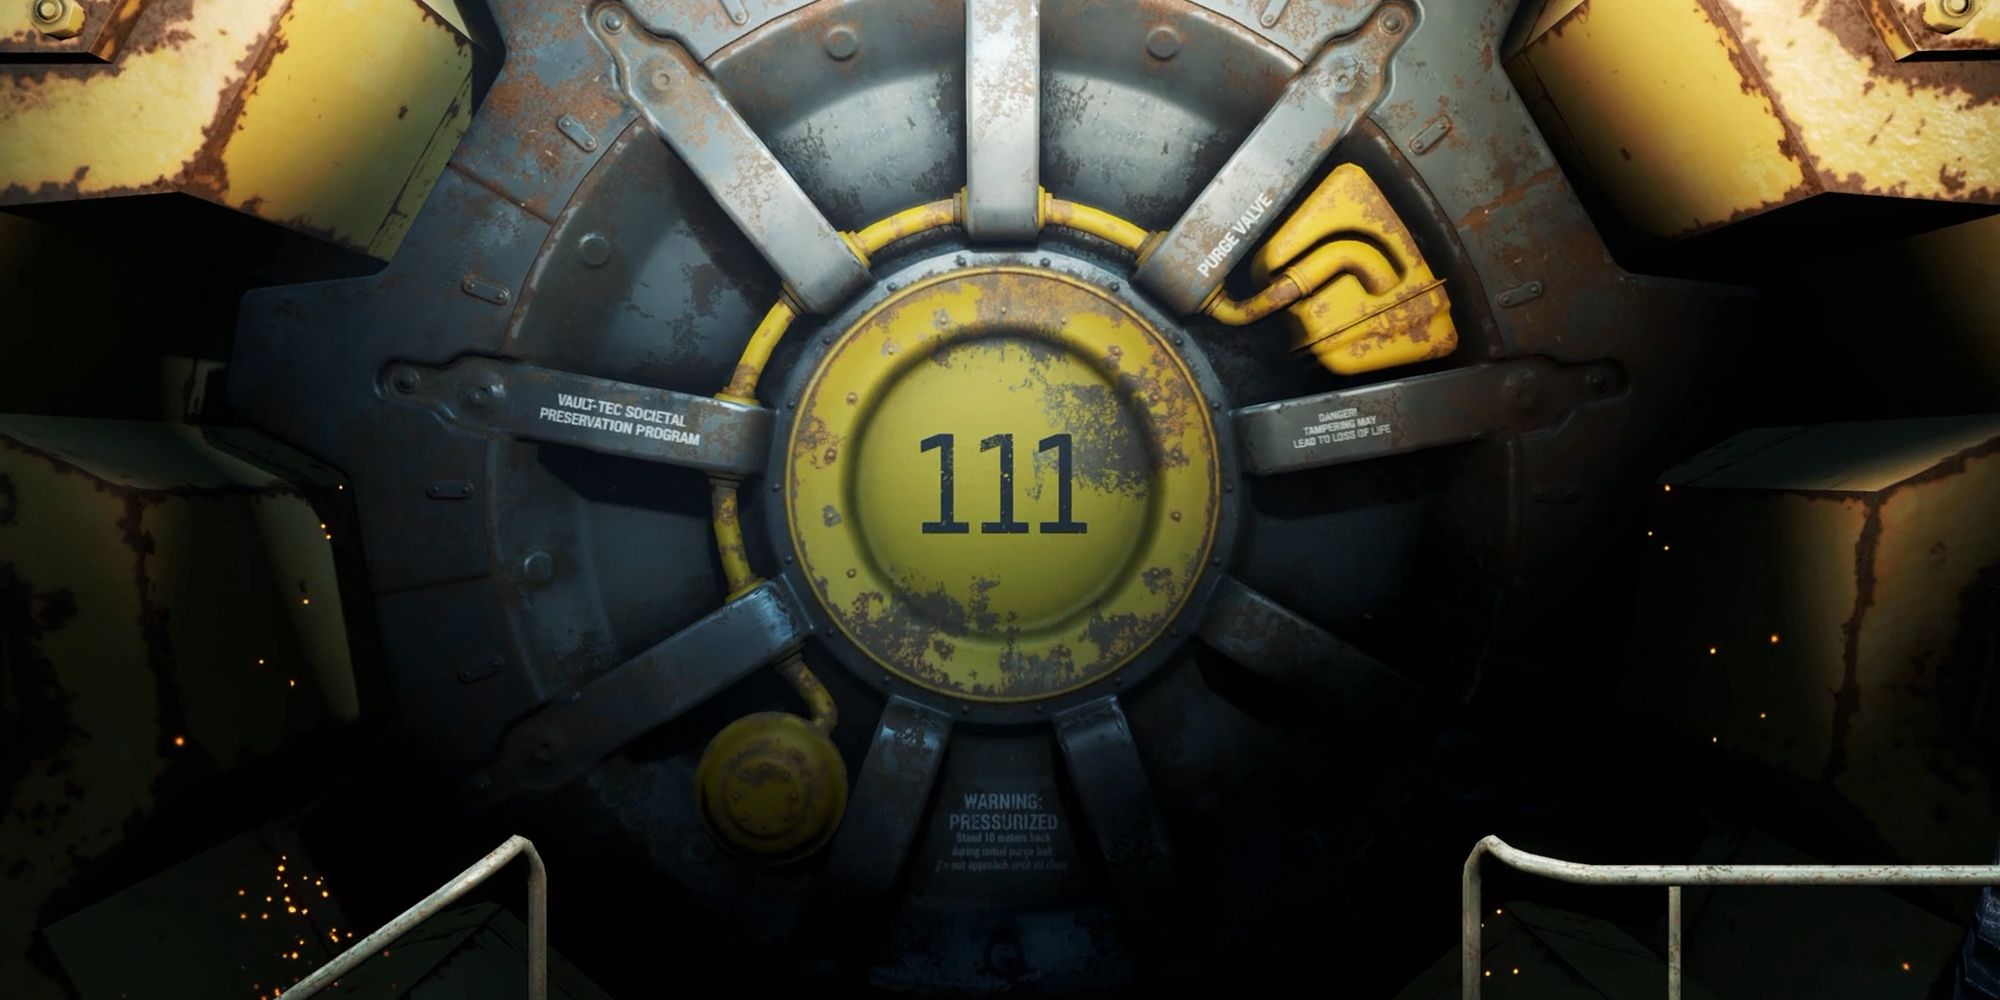 Fallout Vault 111 door locked shut